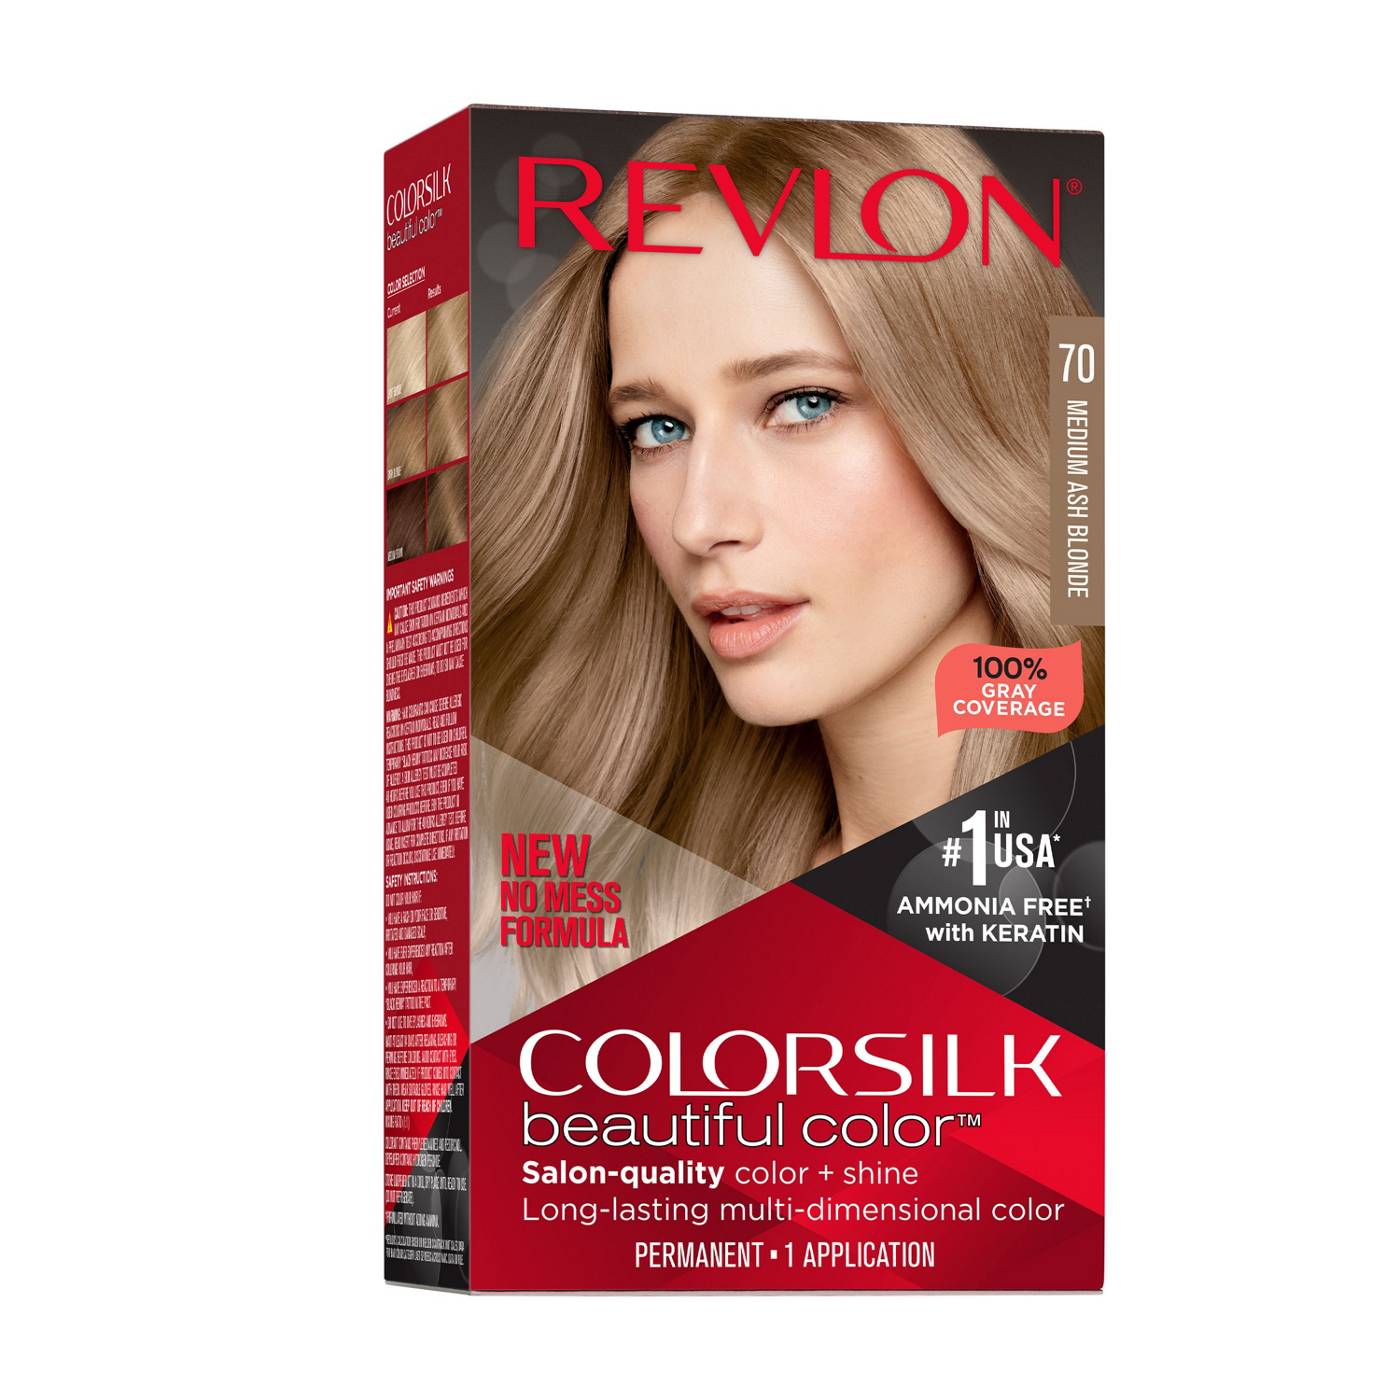 Revlon ColorSilk Hair Color - 70 Medium Ash Blonde; image 1 of 7